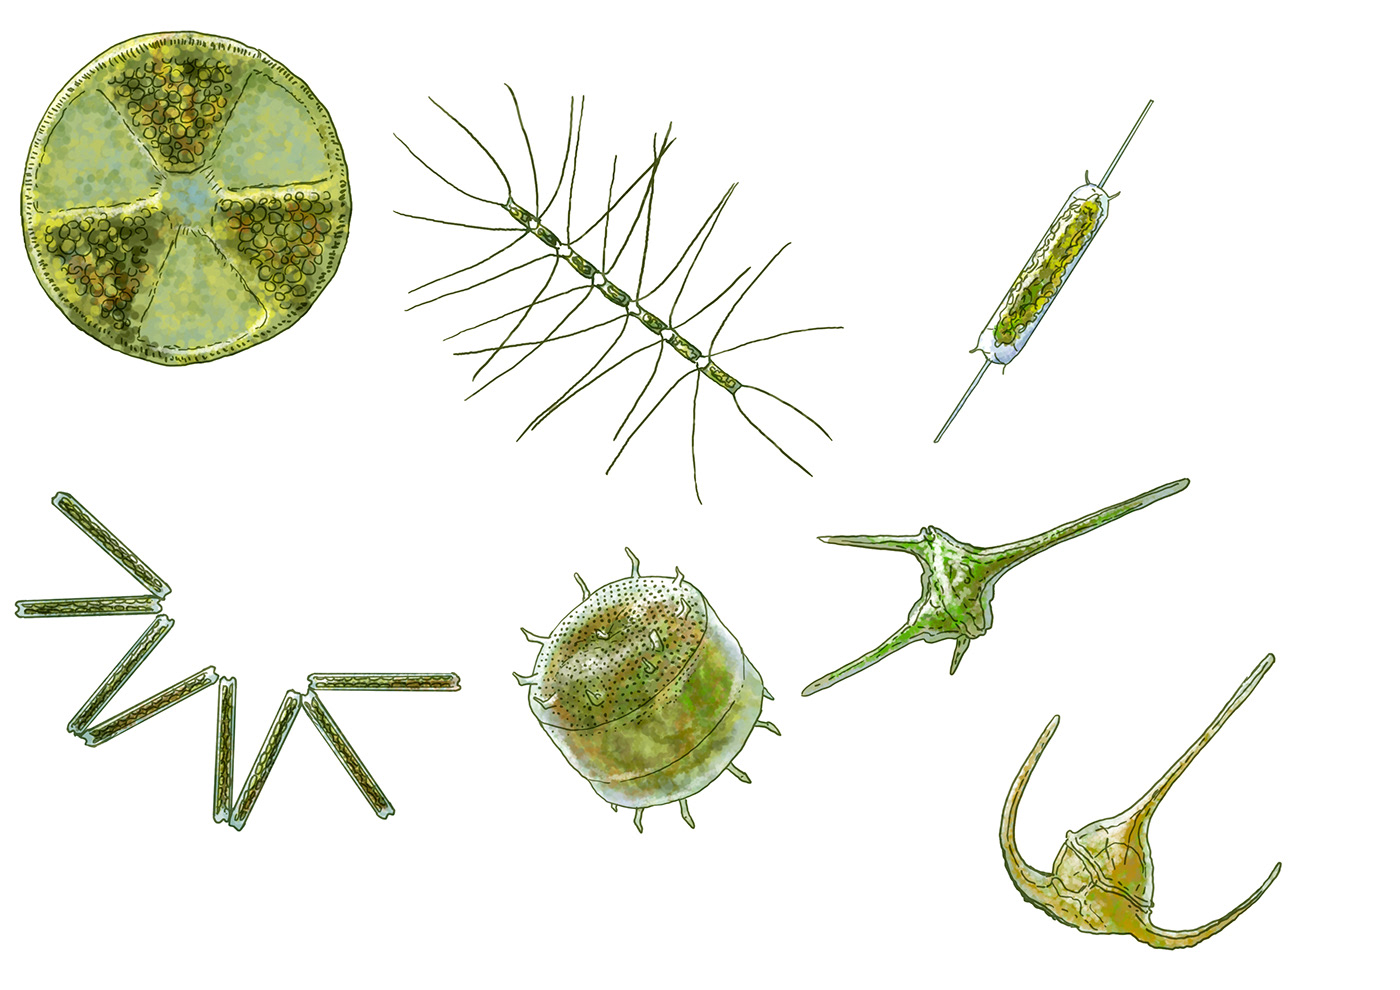 Фитопланктон образован. Фитопланктон водоросли. Фитопланктон зеленые водоросли. Фитопланктон строение. Фитопланктон это растение.